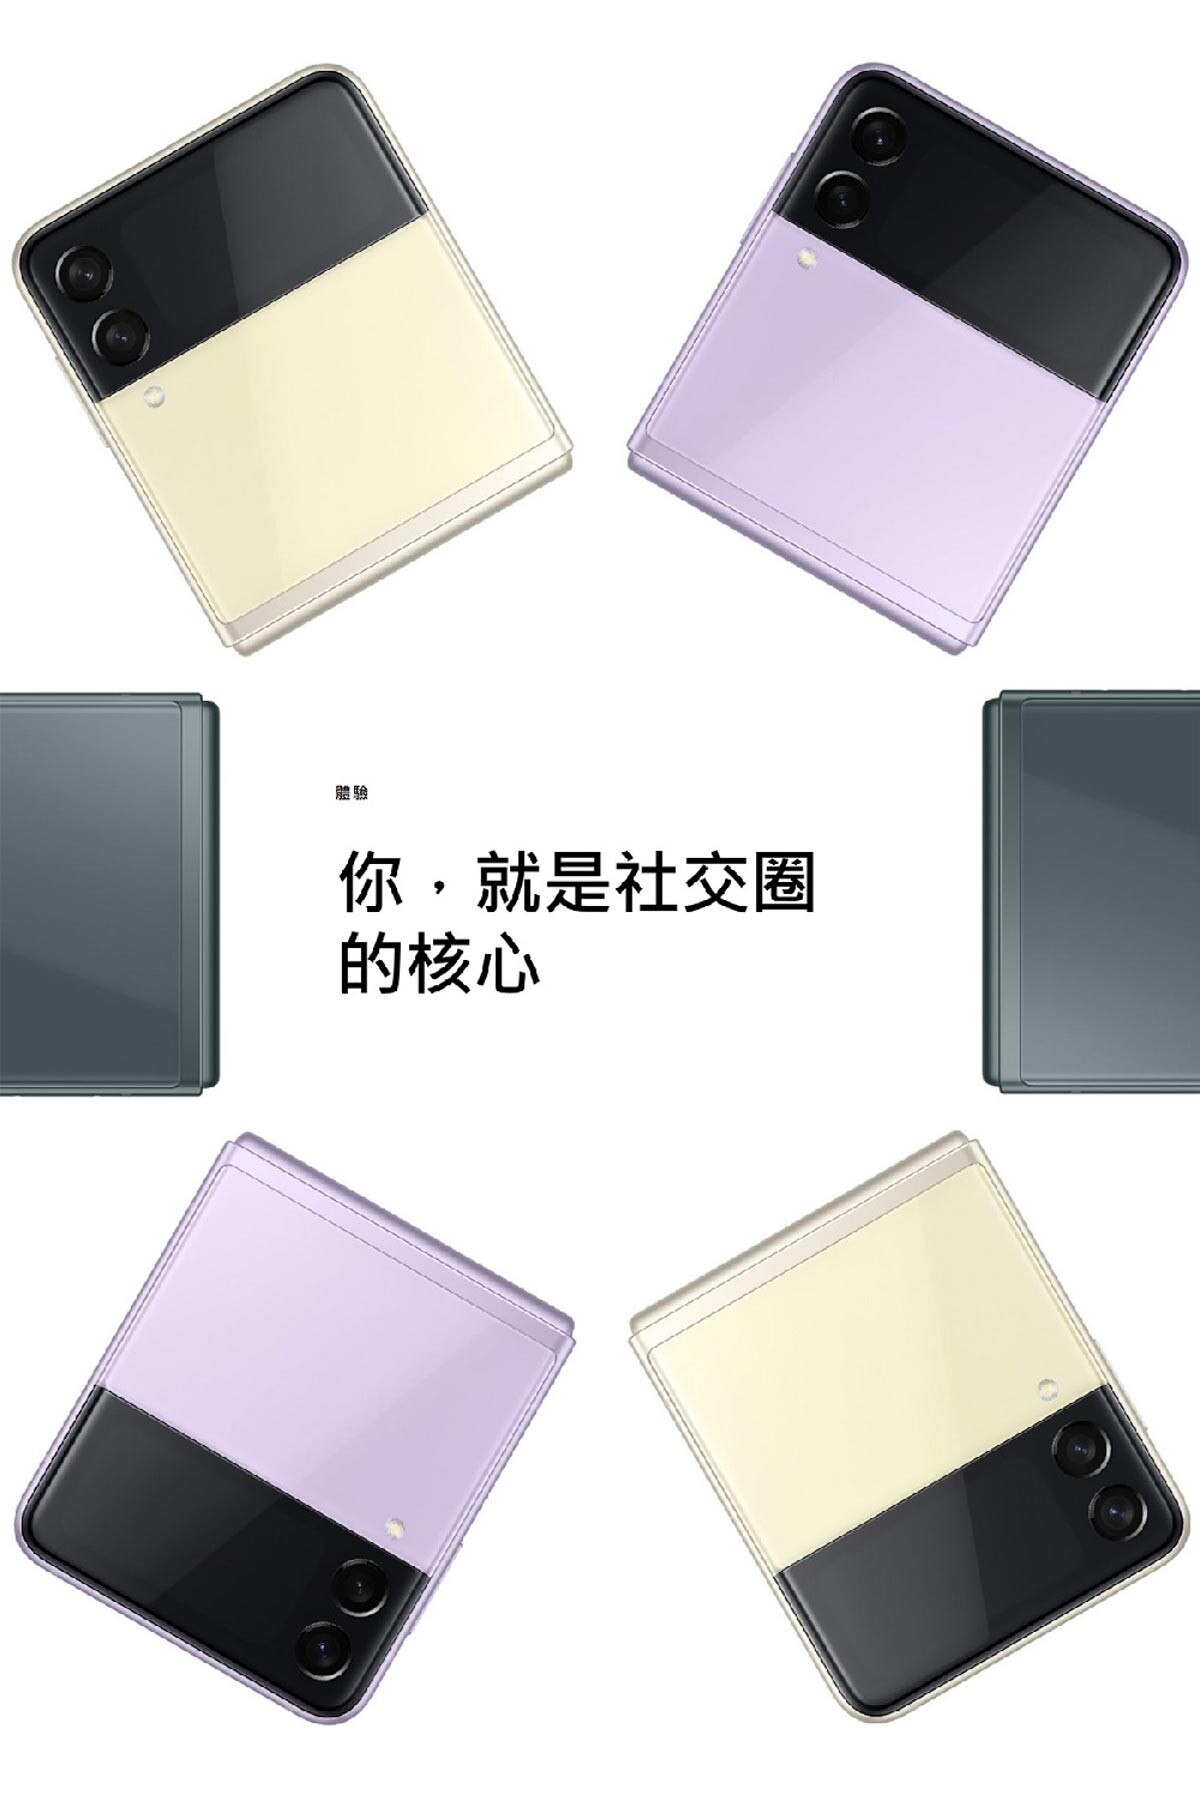 SAMSUNG Z-FOLD 3 5G 雙主鏡折疊式智慧型手機 絨絲白，內頁螢幕採用三星超薄可摺式玻璃製成，手機增添面板層和保護膜，讓耐用性提升 80%，摺疊次數可達 200,000 次。